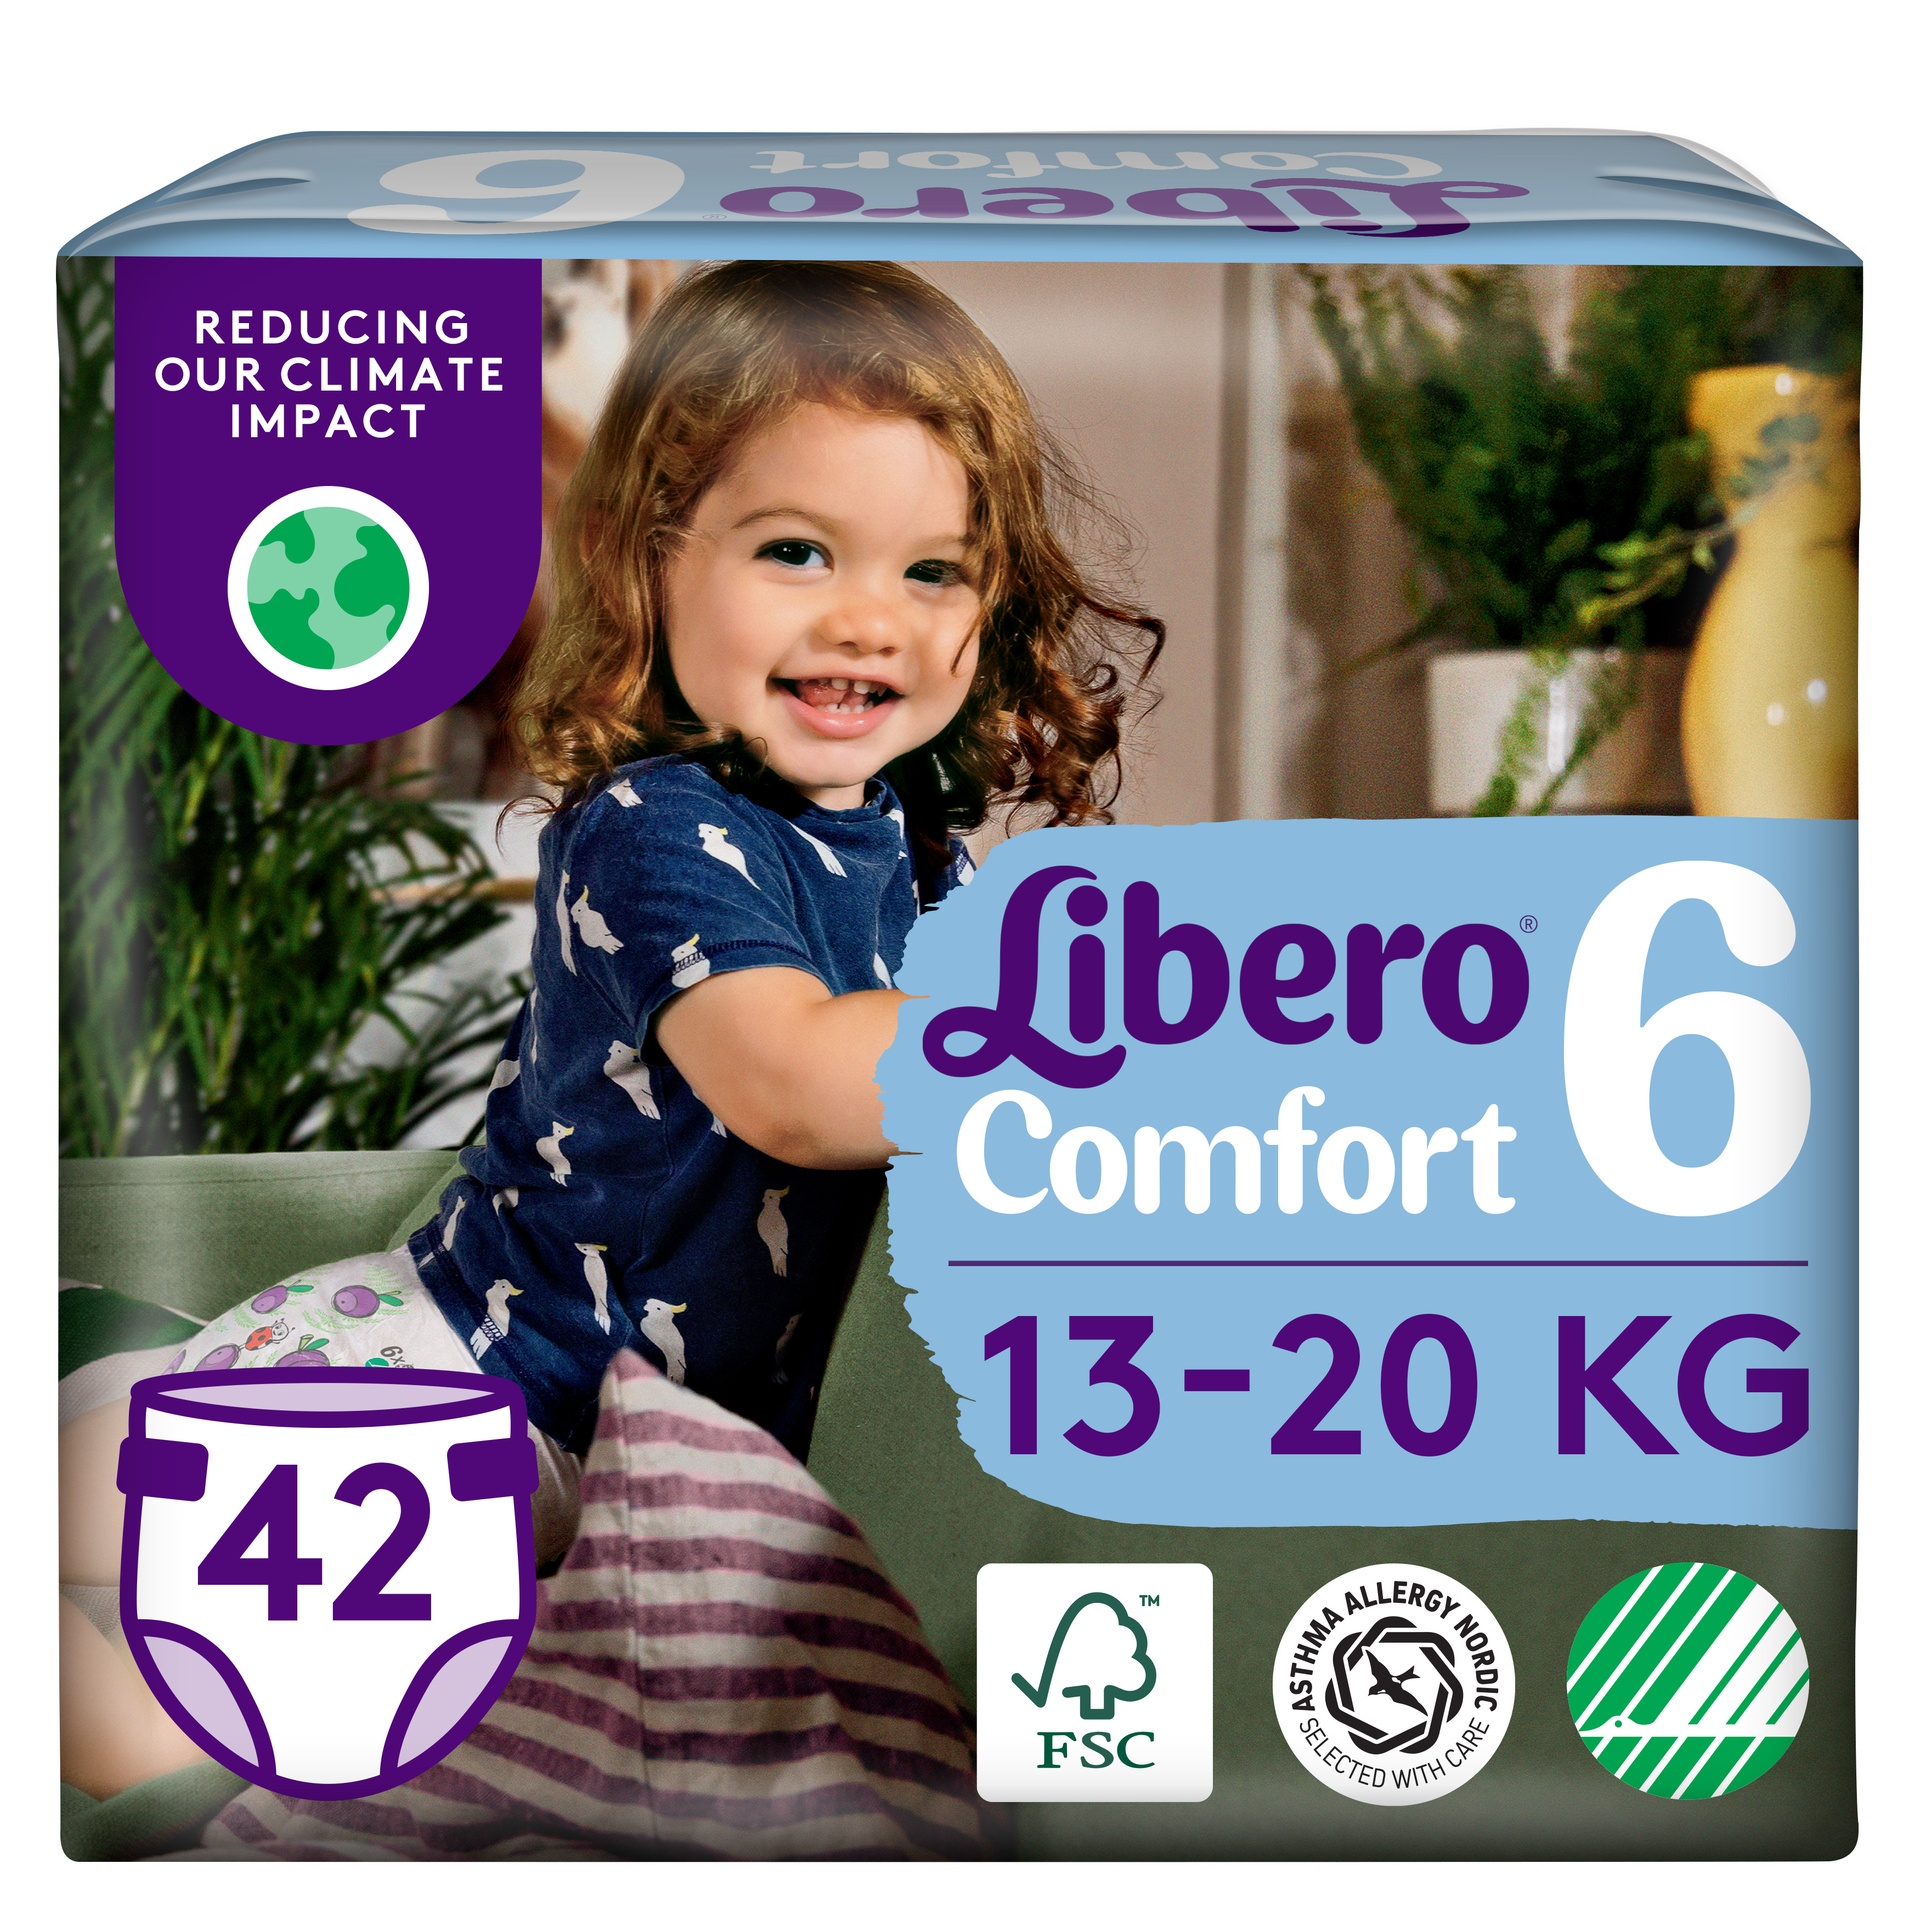 [8562441] Blöjor Comfort 6,13-20kg 42st